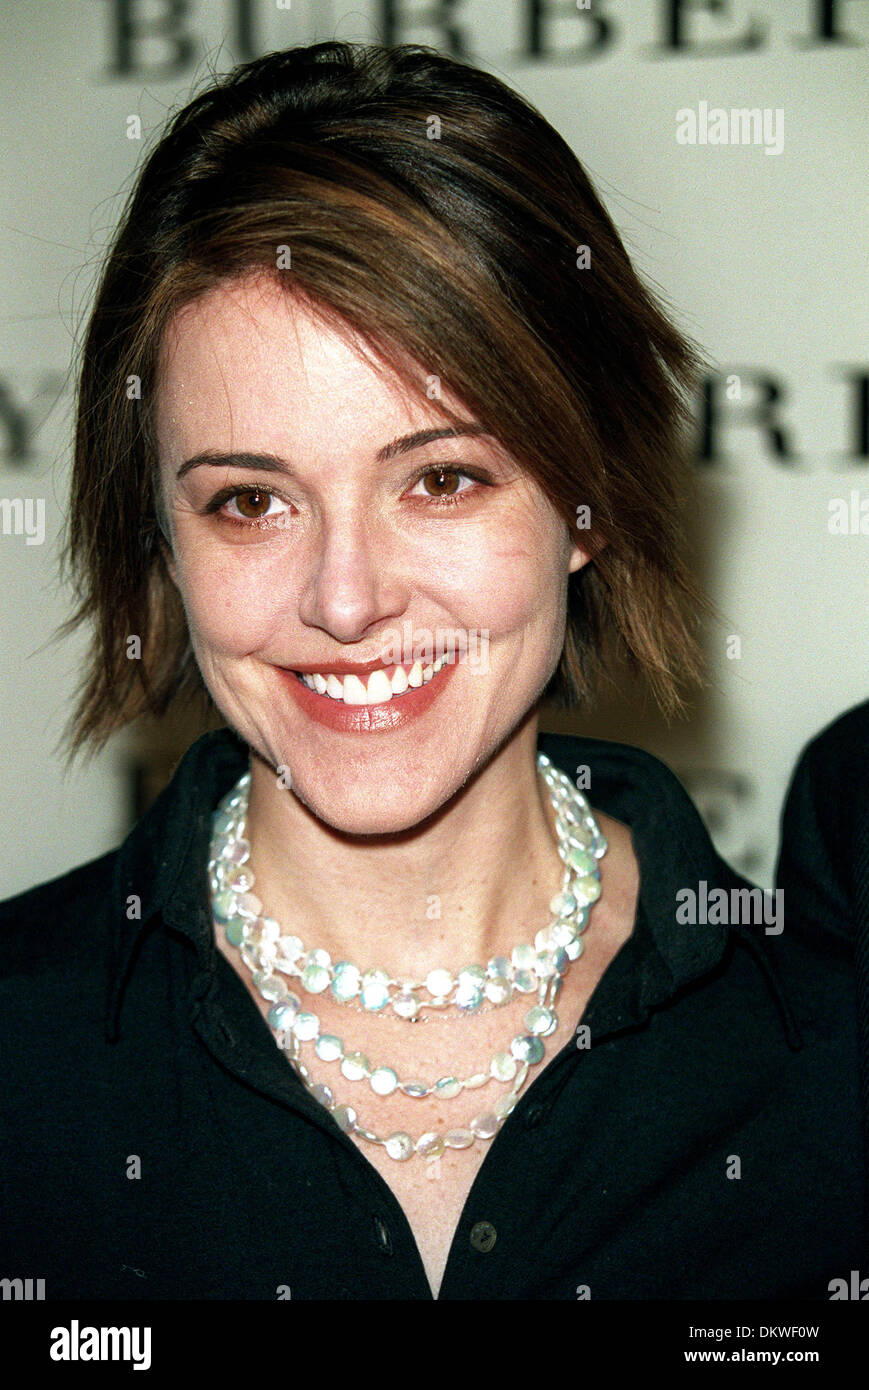 CHRISTA MILLER.ACTRESS.BEVERLEY HILLS, LA, USA.25/10/2001.BM64C14C. 2001 Stock Photo